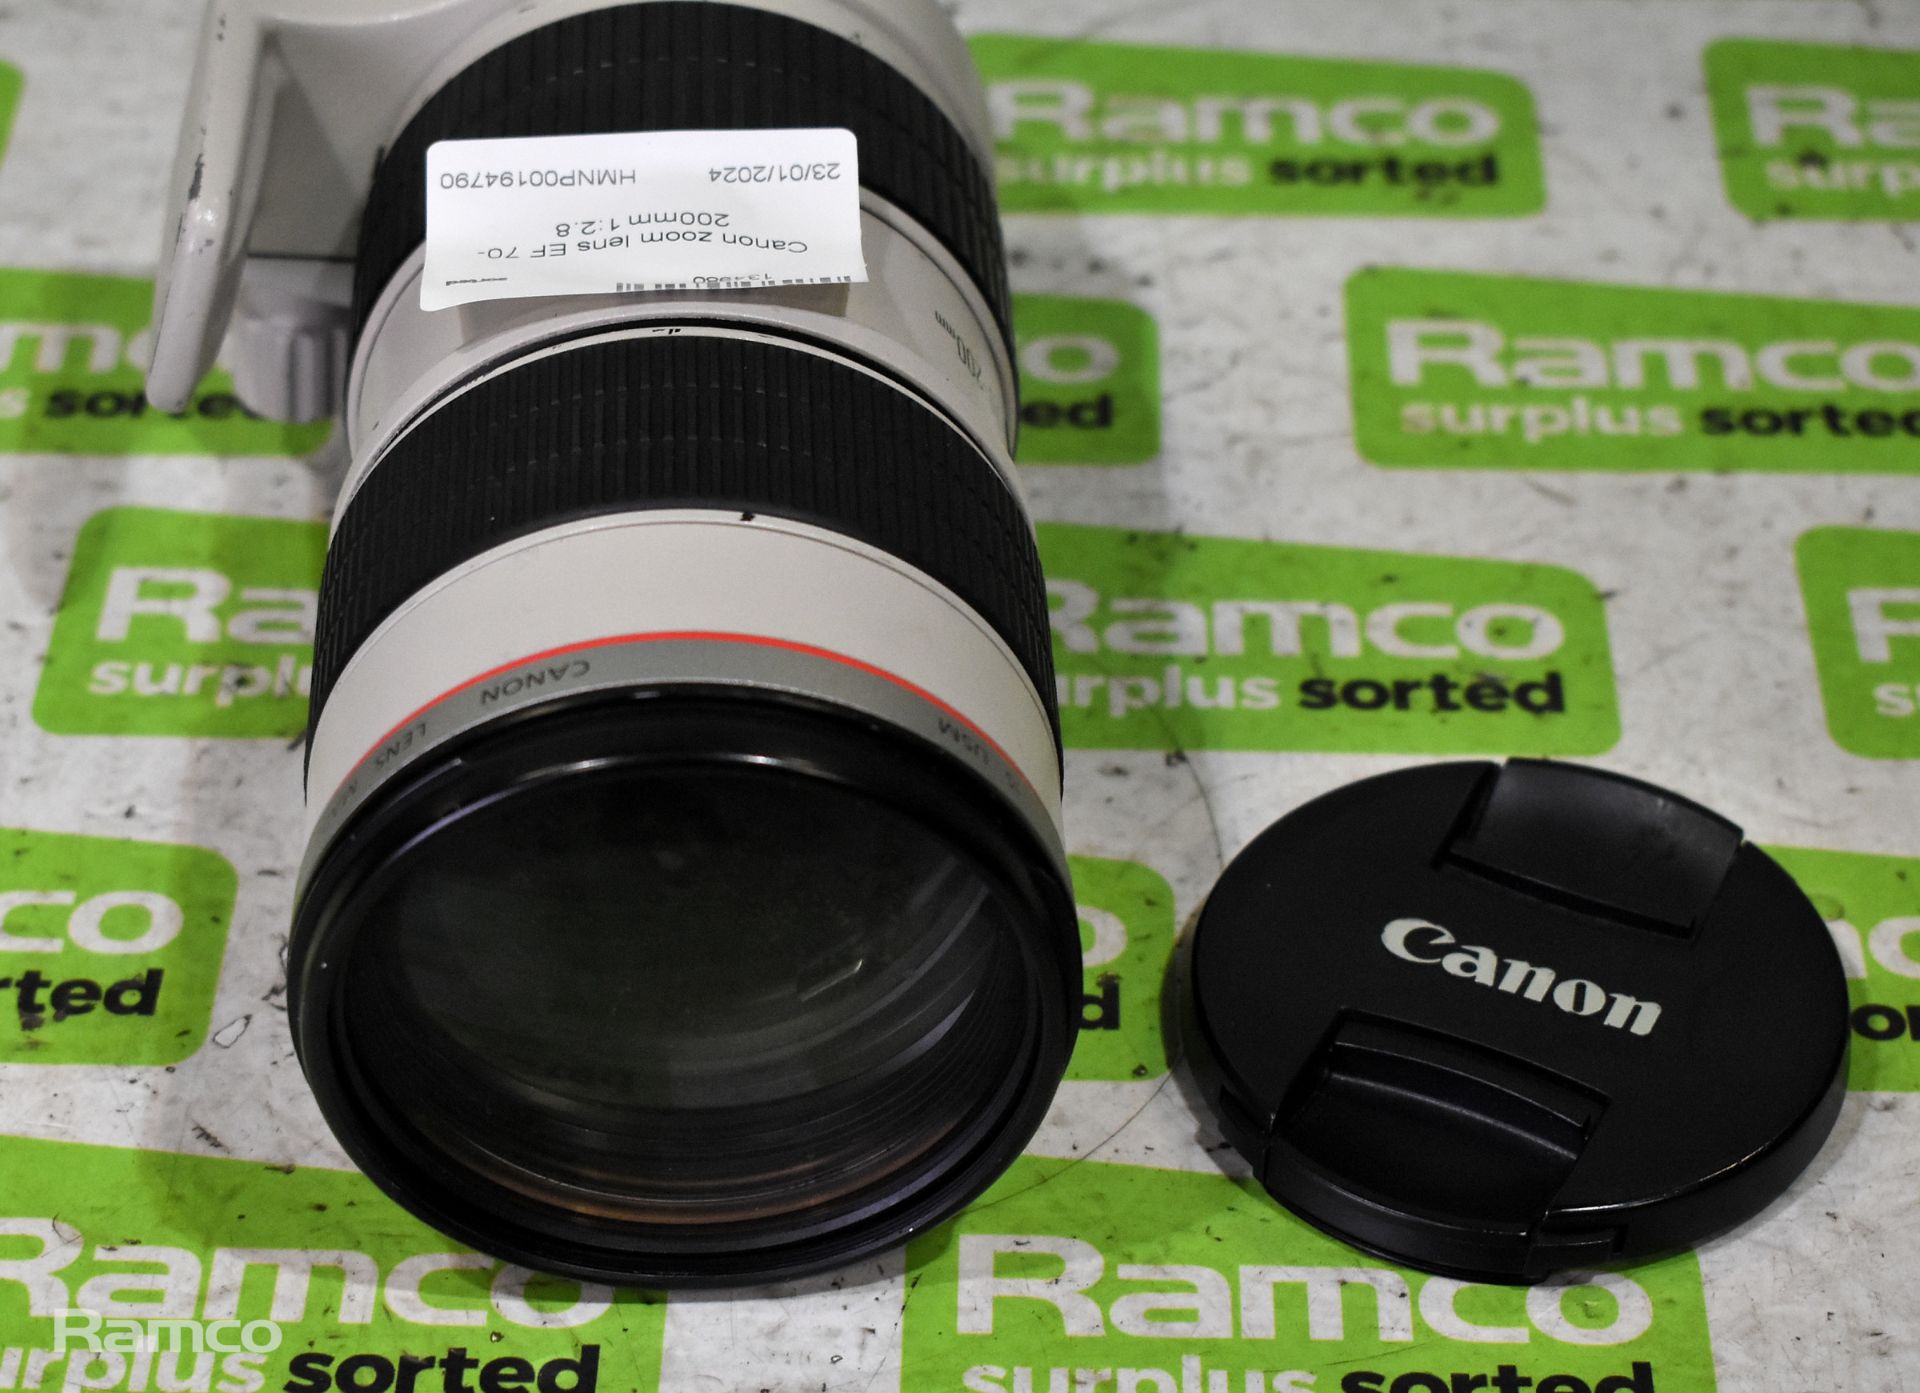 Canon zoom lens EF 70-200mm 1:2.8 - lens barrel is loose - Image 5 of 7